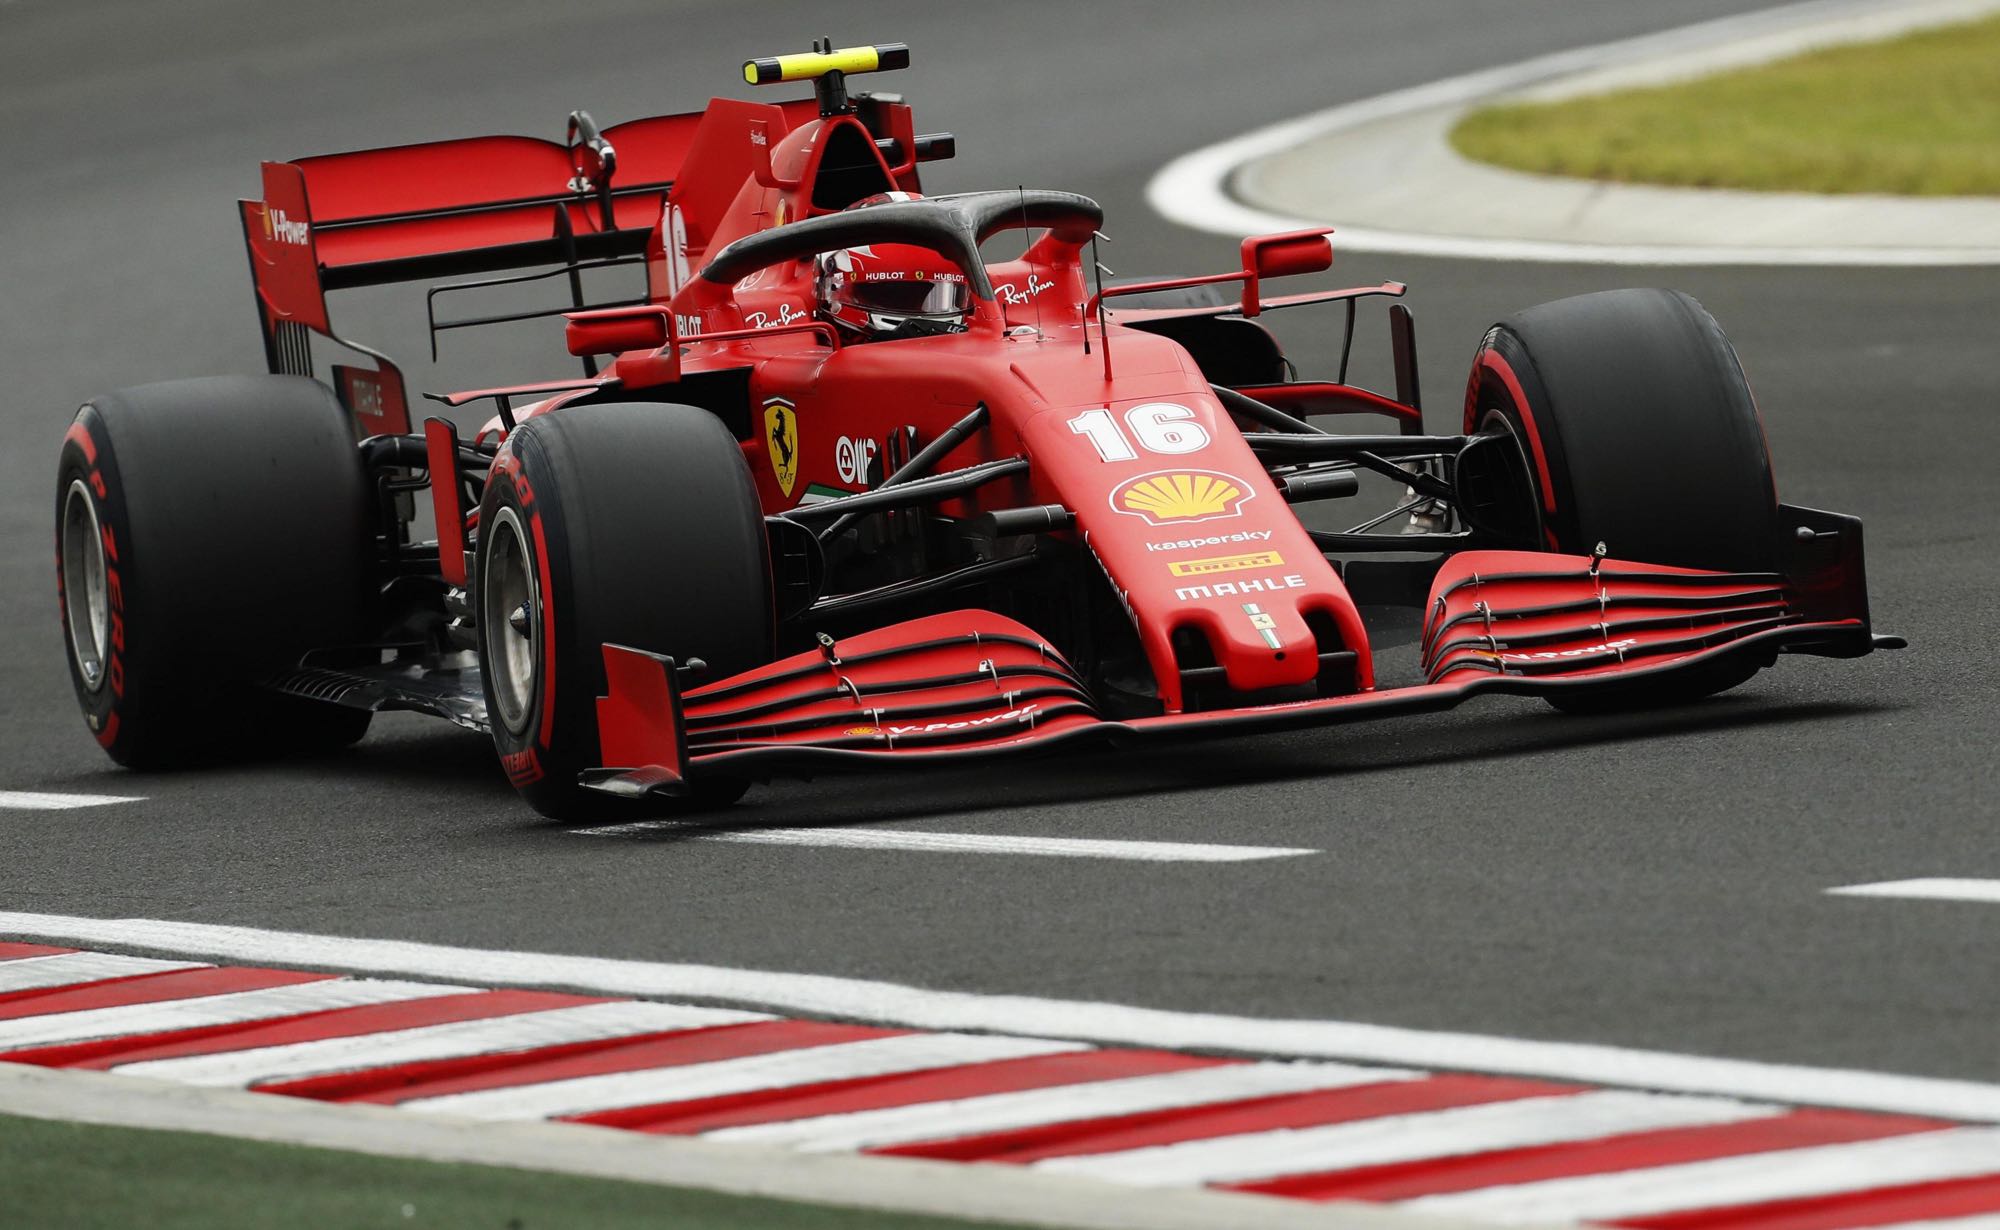 General 2000x1230 Ferrari F1 Formula 1 red cars race tracks Charles Leclerc Racing driver Scuderia Ferrari italian cars